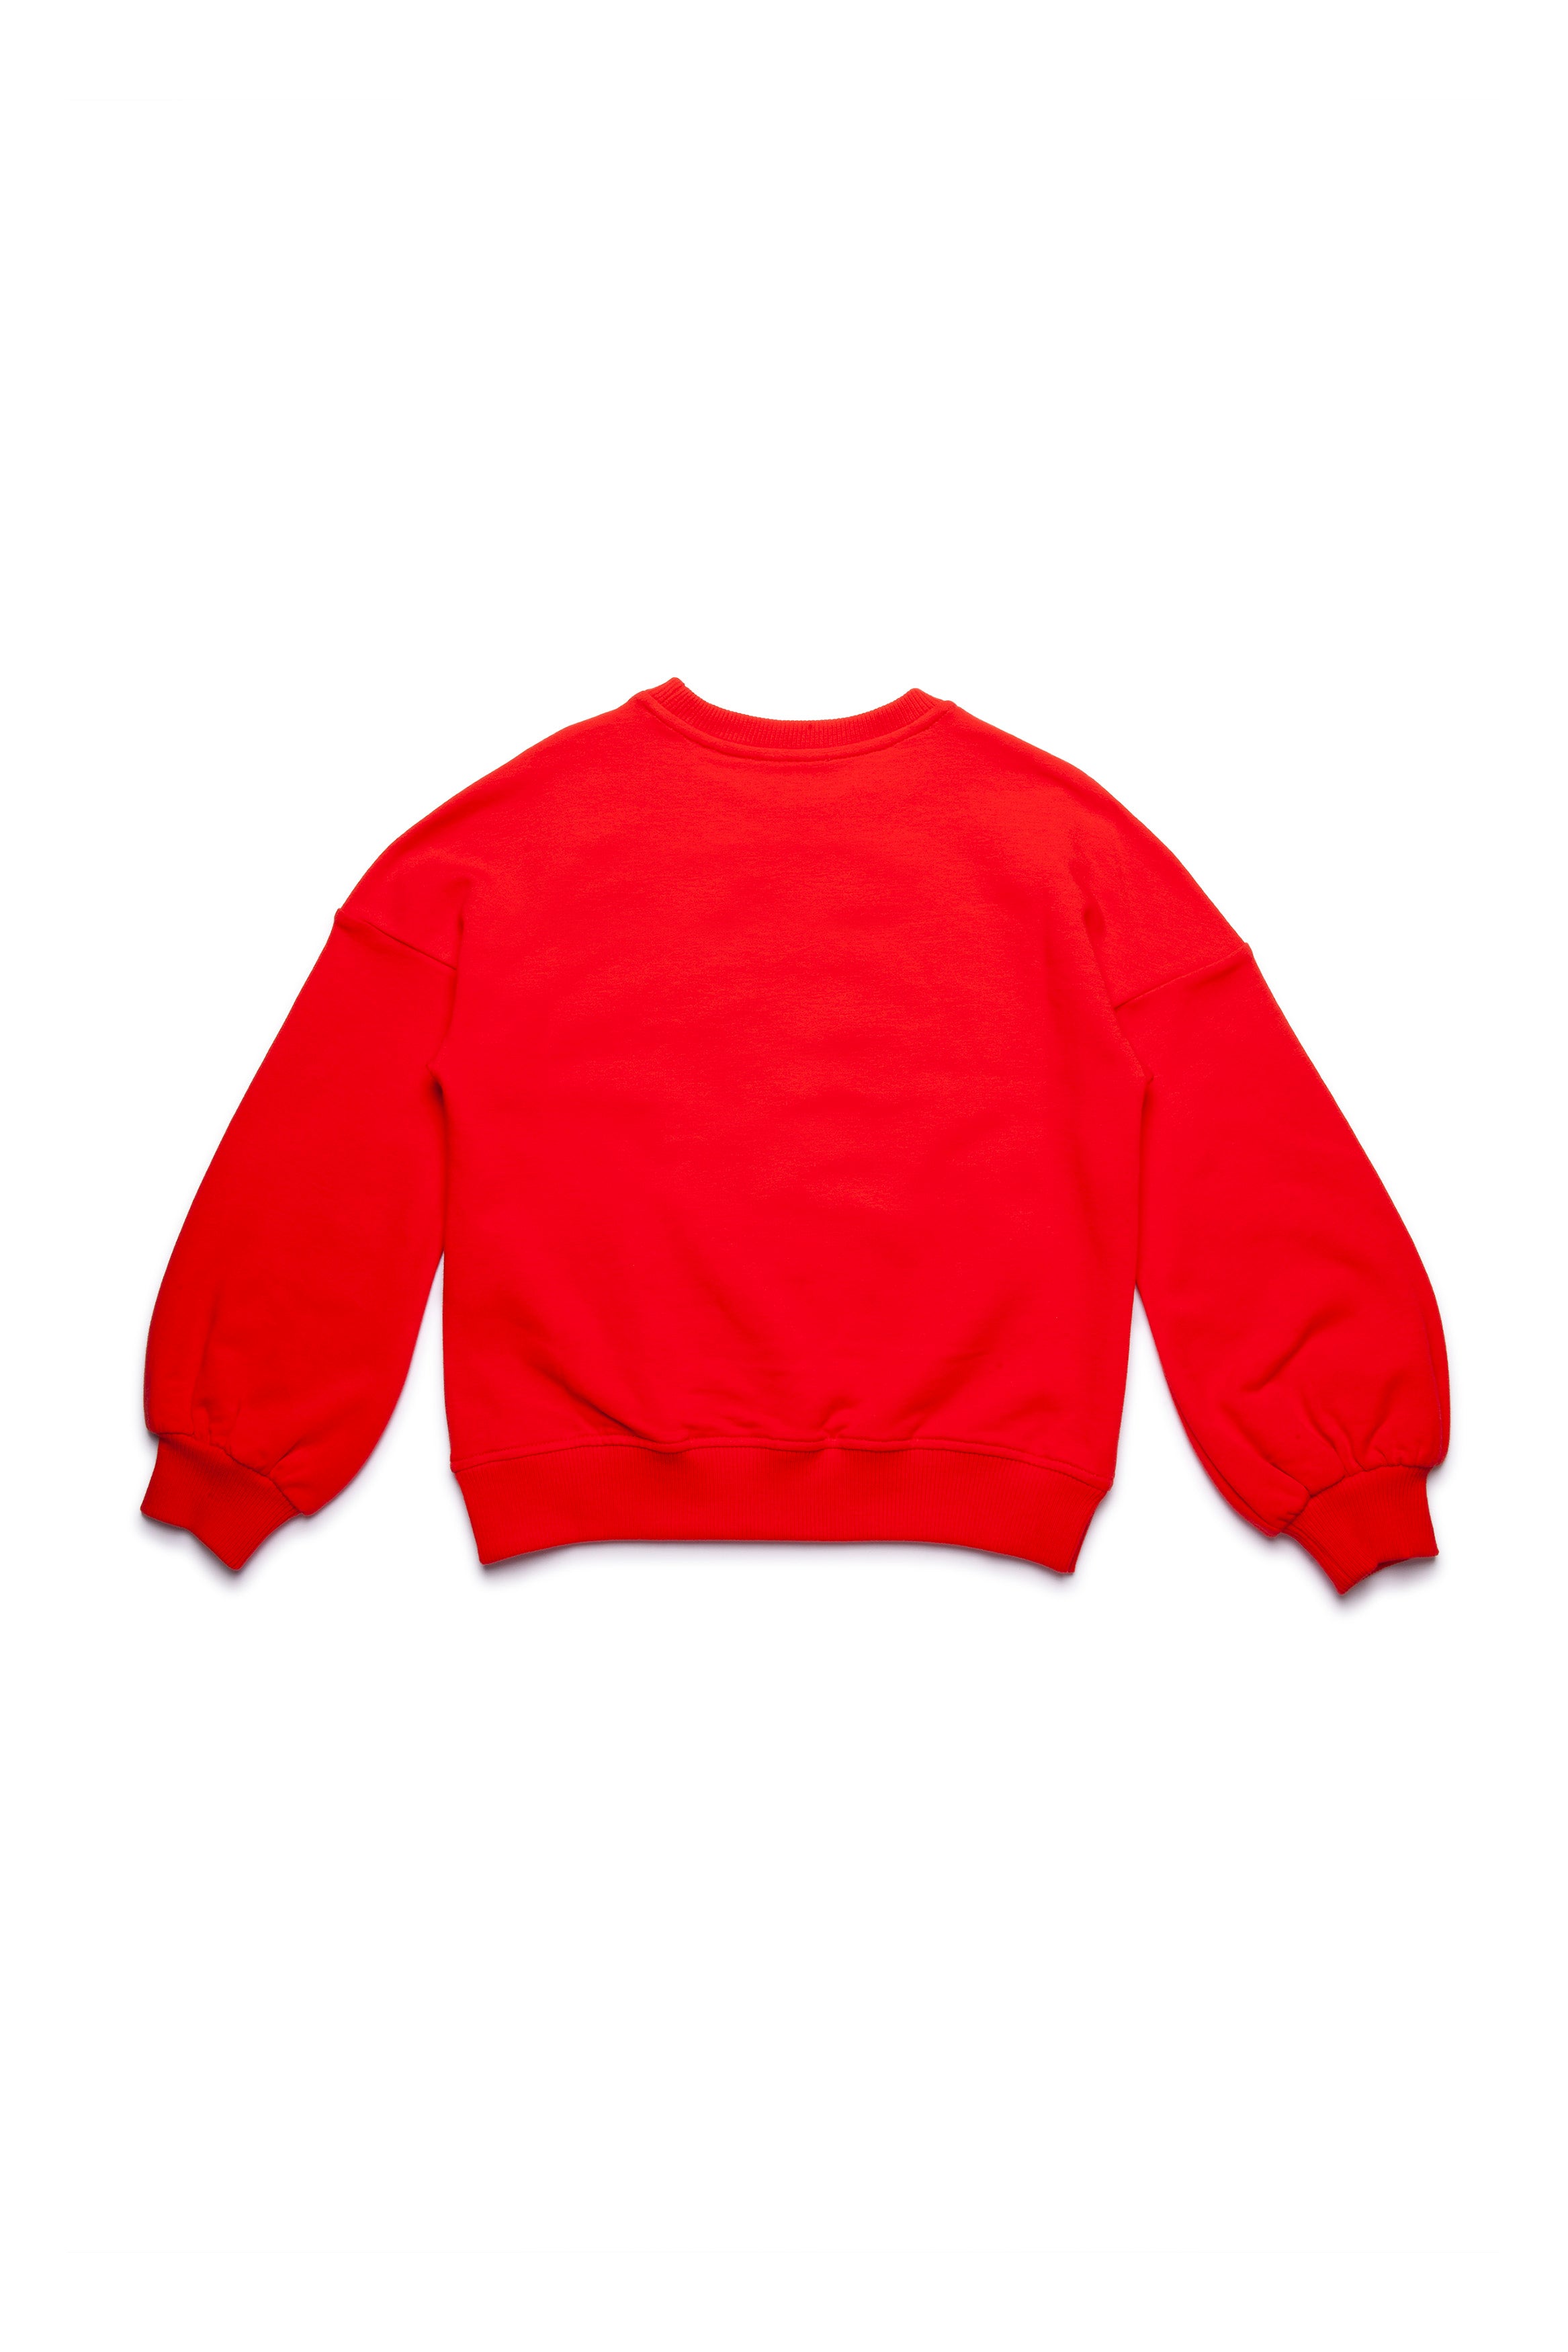 Girls Red Printing Cotton Sweatshirt